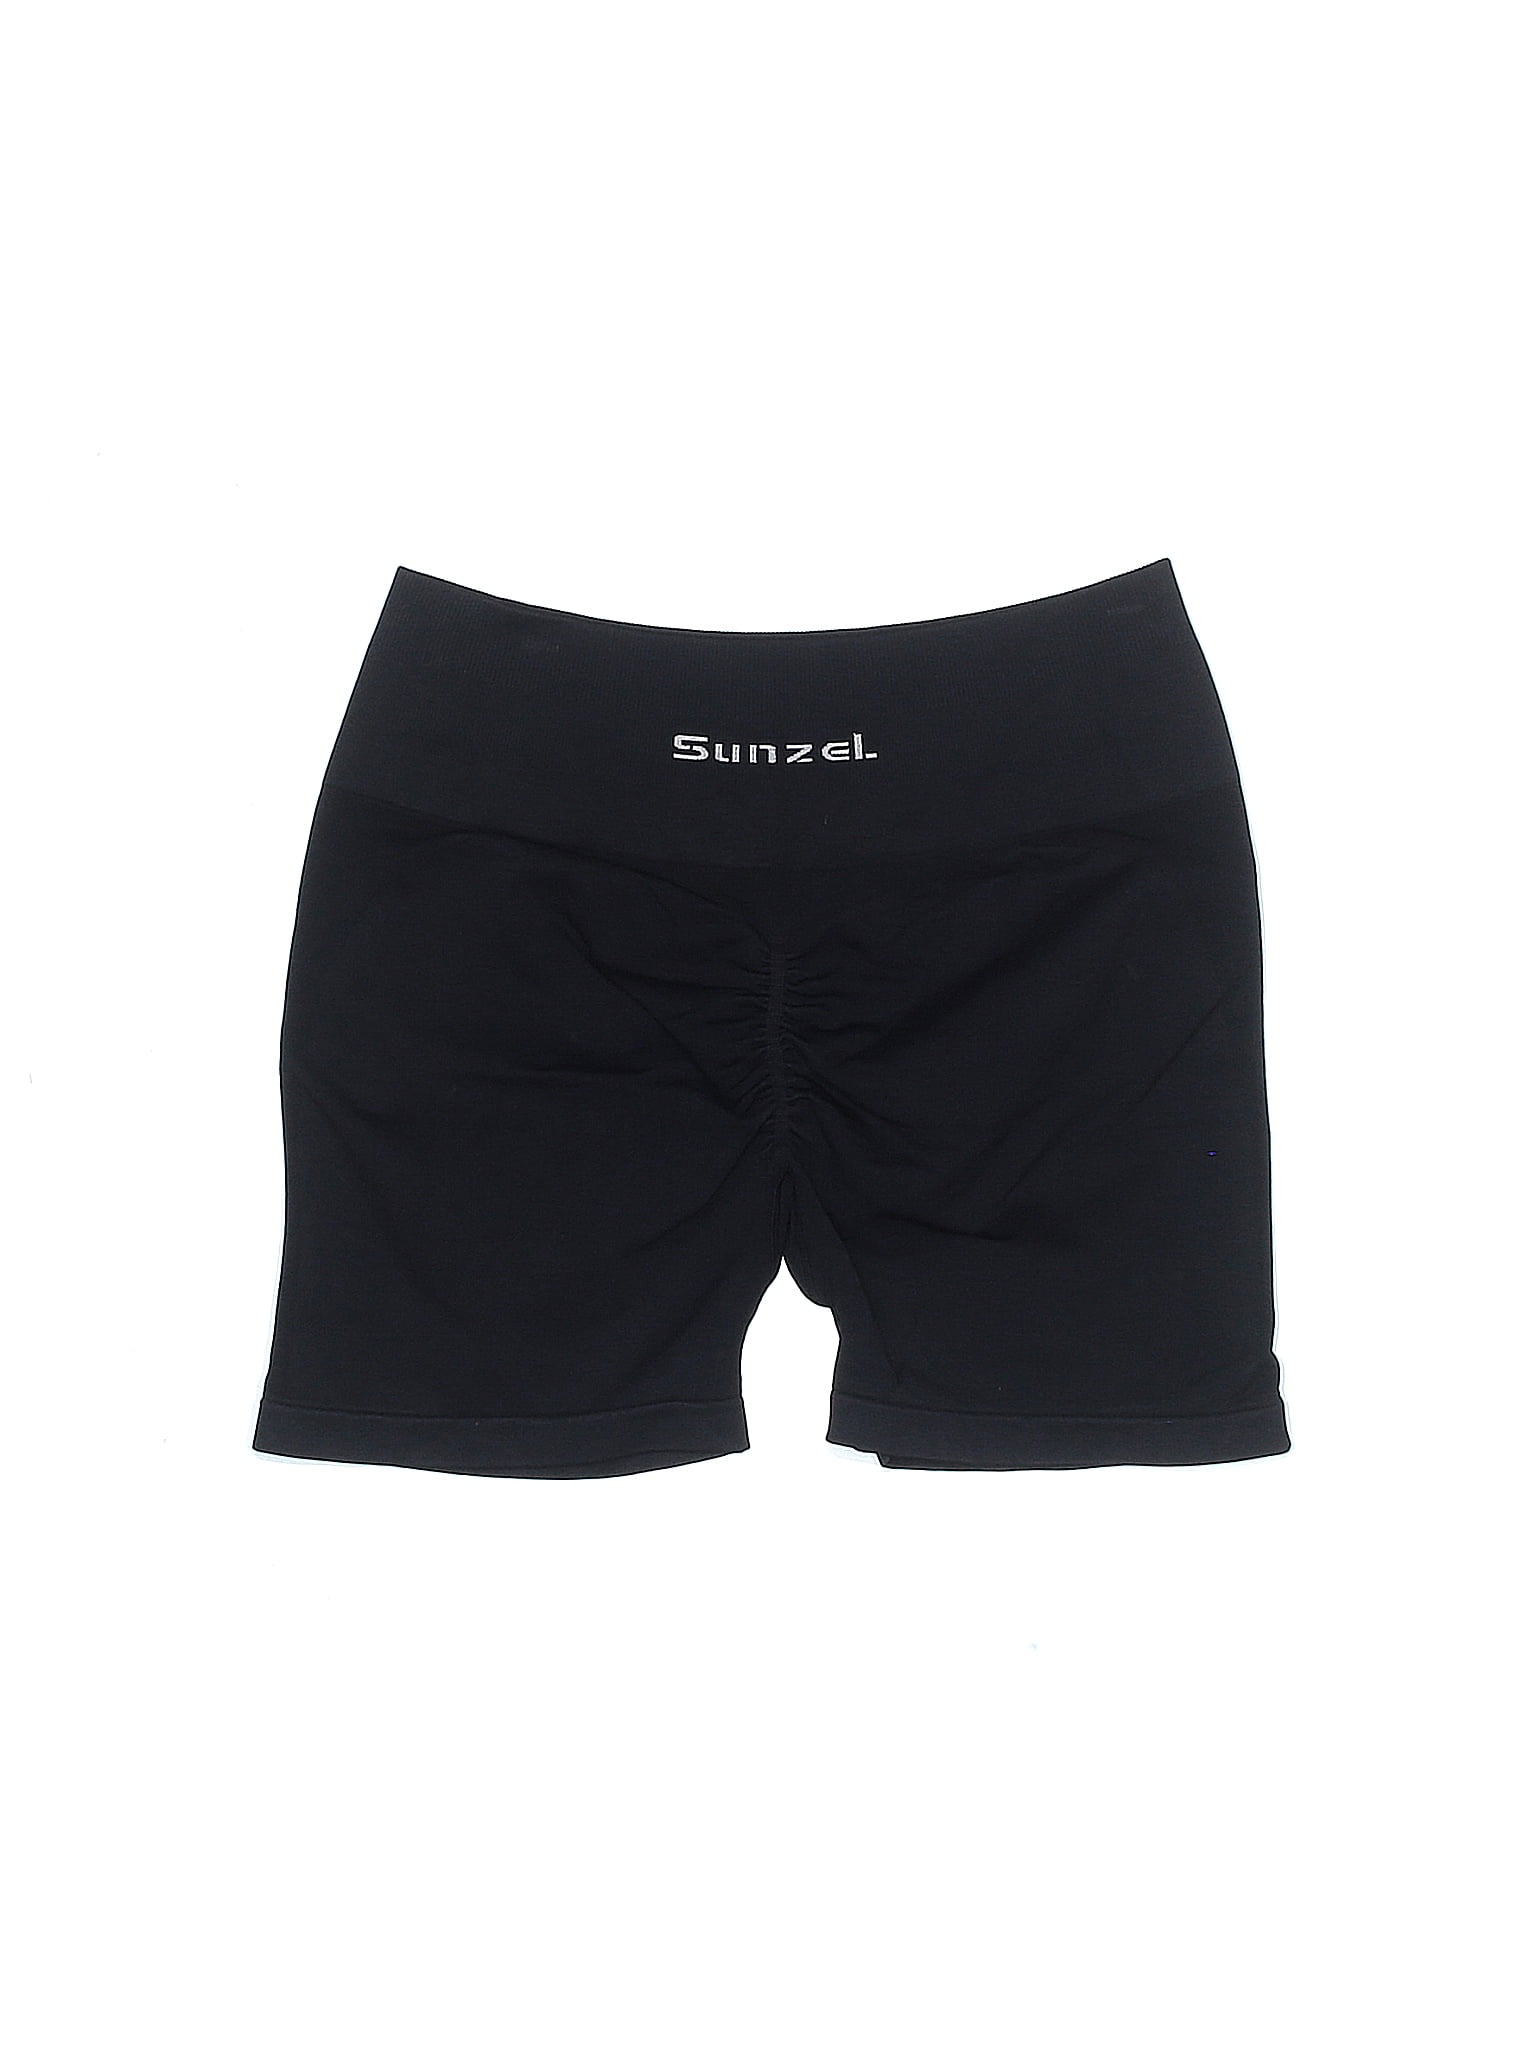 Sunzel Solid Black Athletic Shorts Size L - 48% off